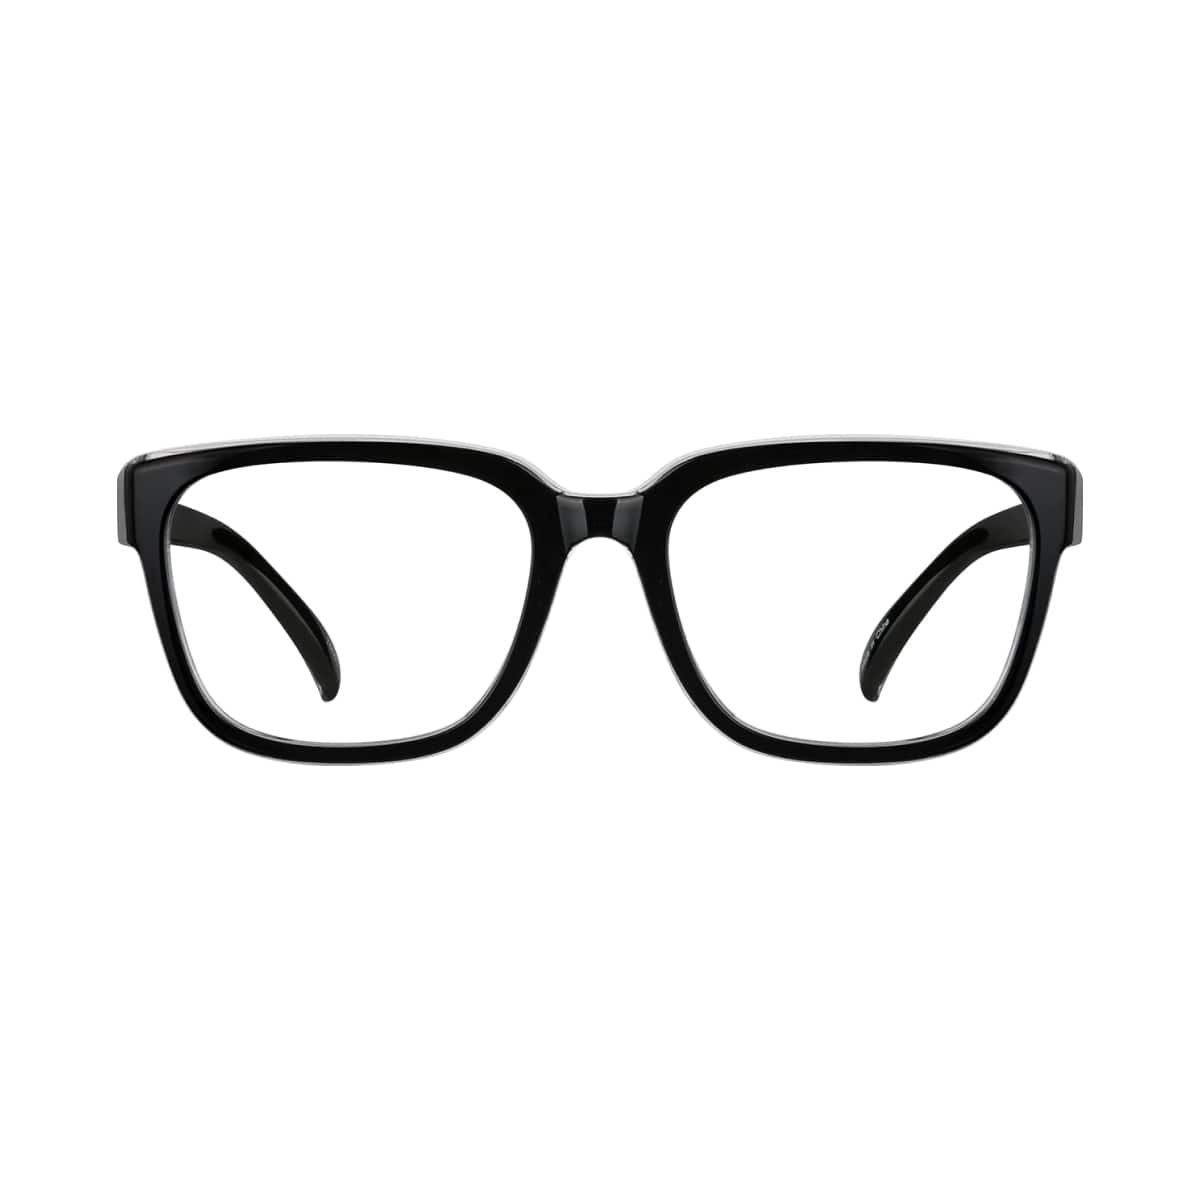 Corporate Safety Glasses Program | Zenni Optical